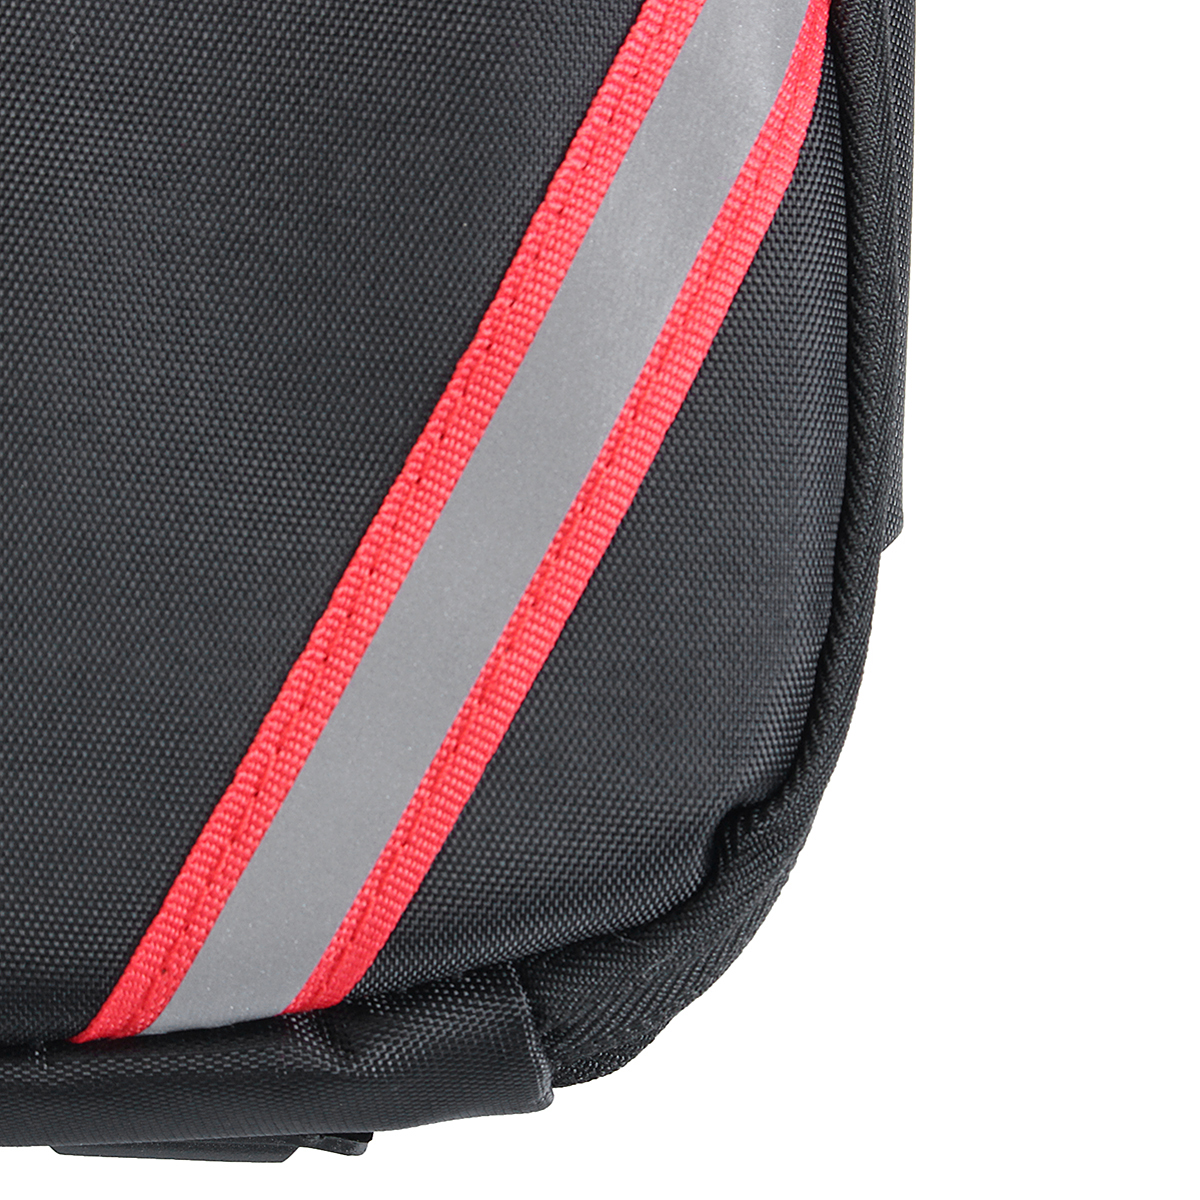 Find Waterproof Shoulder Bag Backpack Rucksack With Reflective Stripe For DSLR Camera for Sale on Gipsybee.com with cryptocurrencies